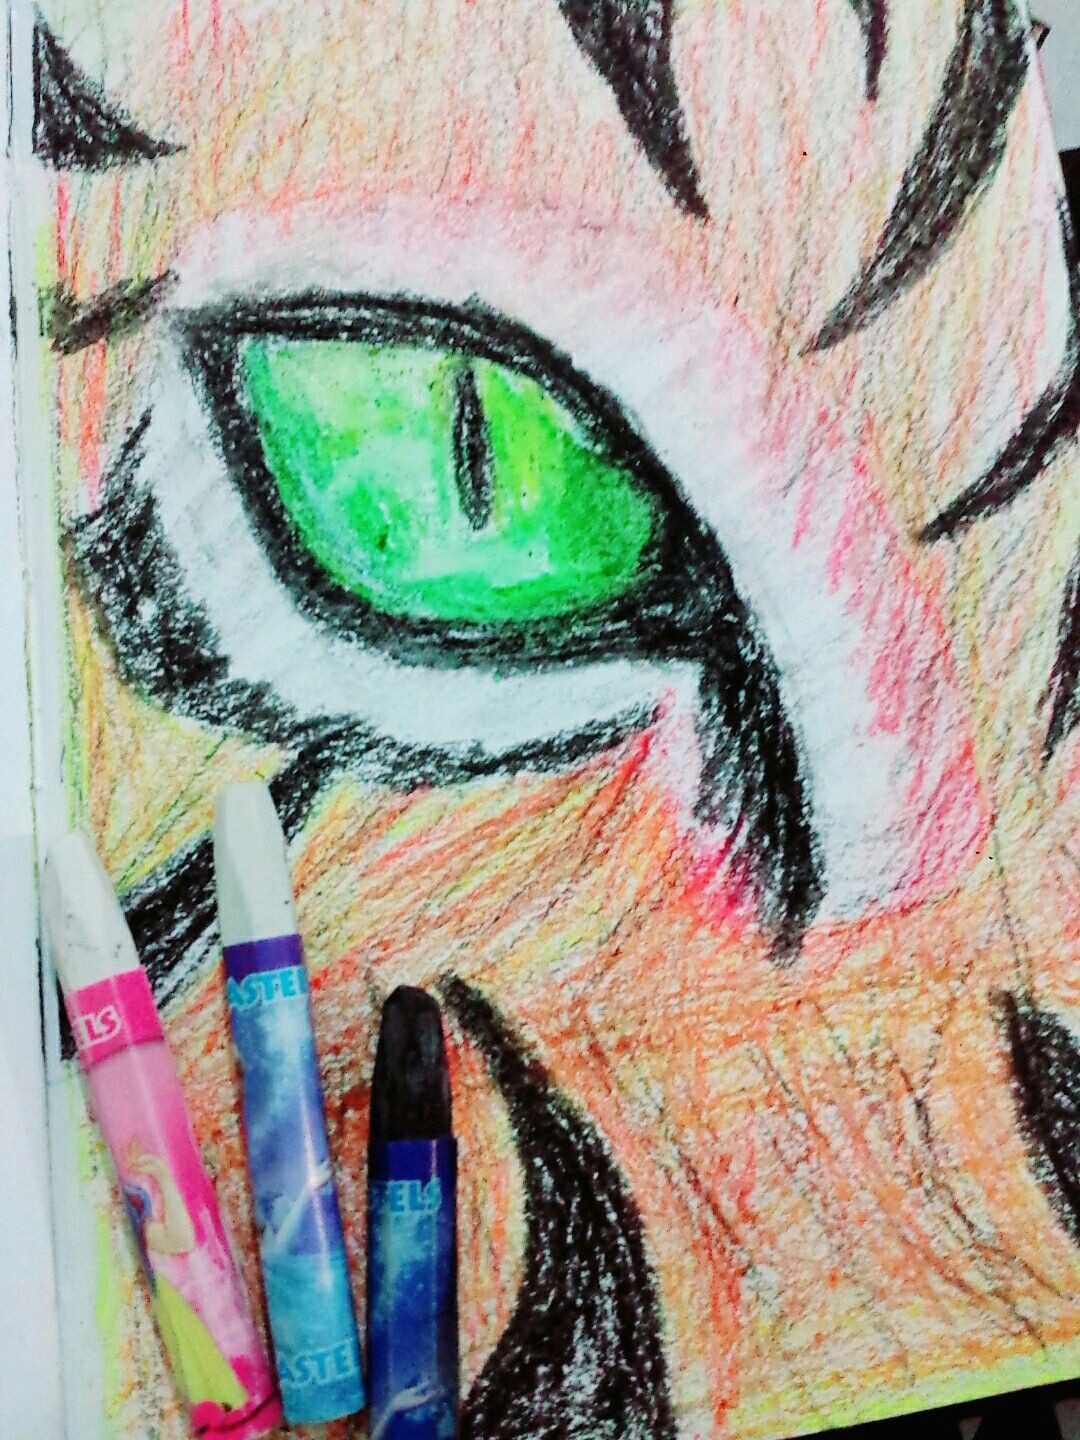 Drawing An Eye with Oil Pastels Loin Eye Oil Pastel Drawing My Art Work Pinterest Oil Pastel